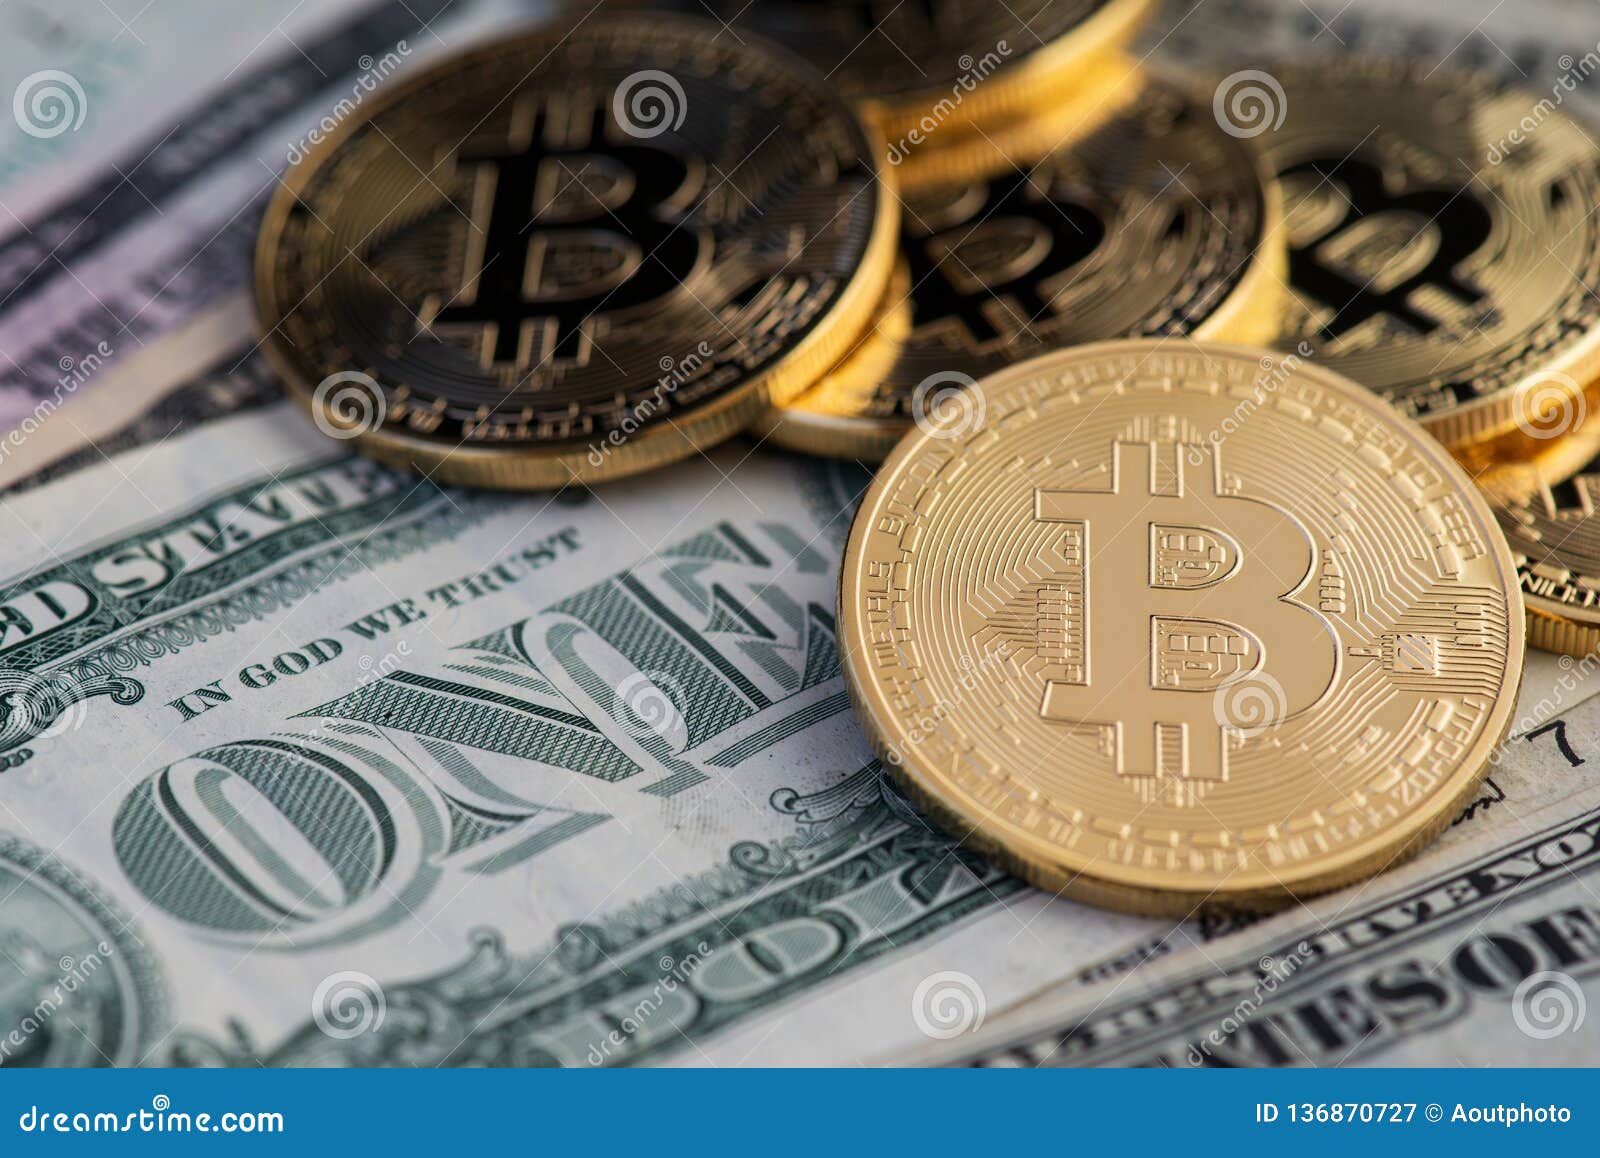 1 bitcoin kaç dolar